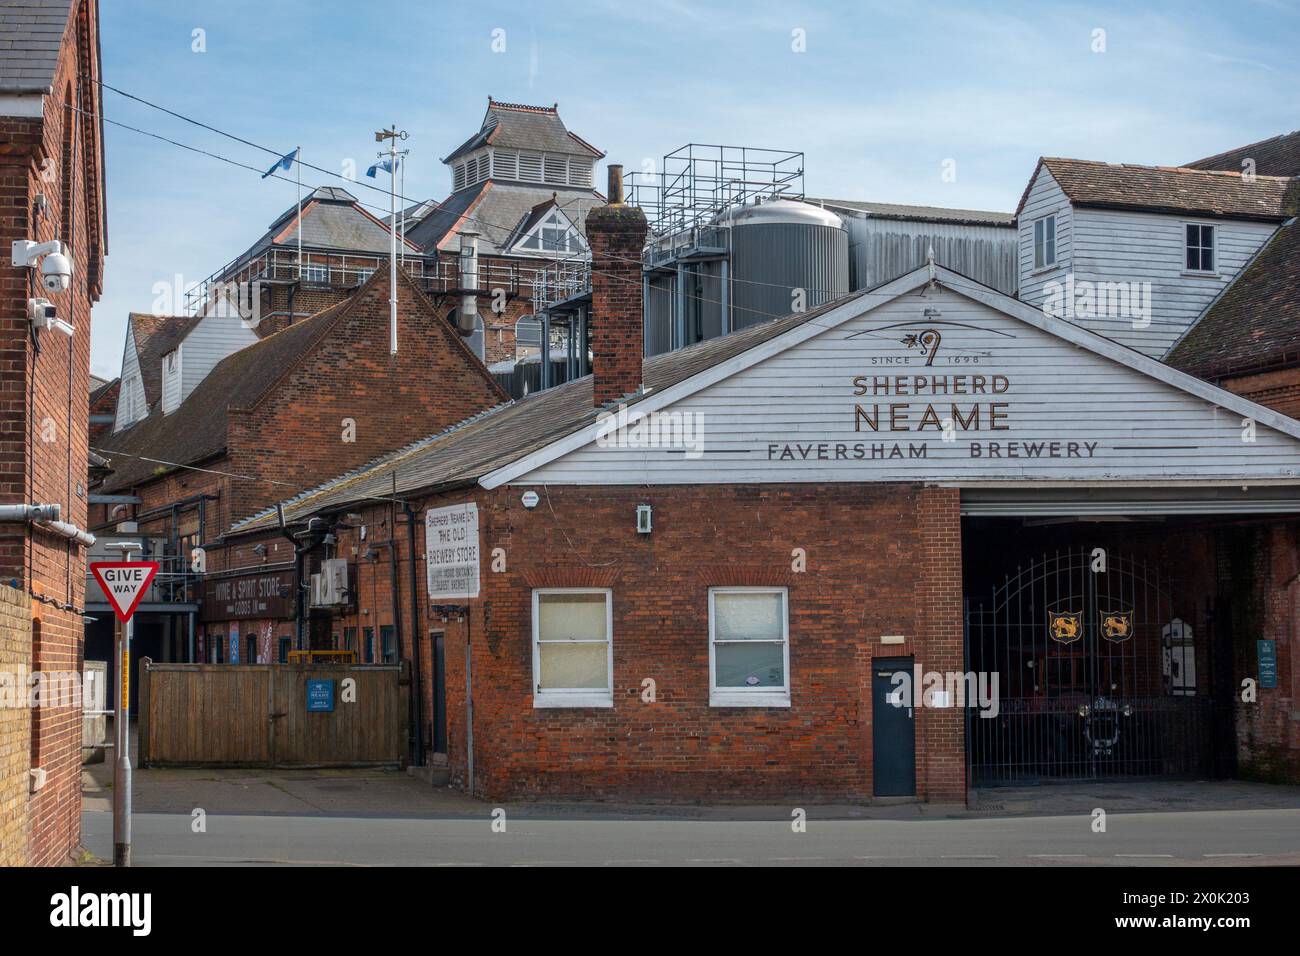 Shepherd Neame, brasserie Faversham, bière, Lager, Faversham, Kent, Angleterre Banque D'Images